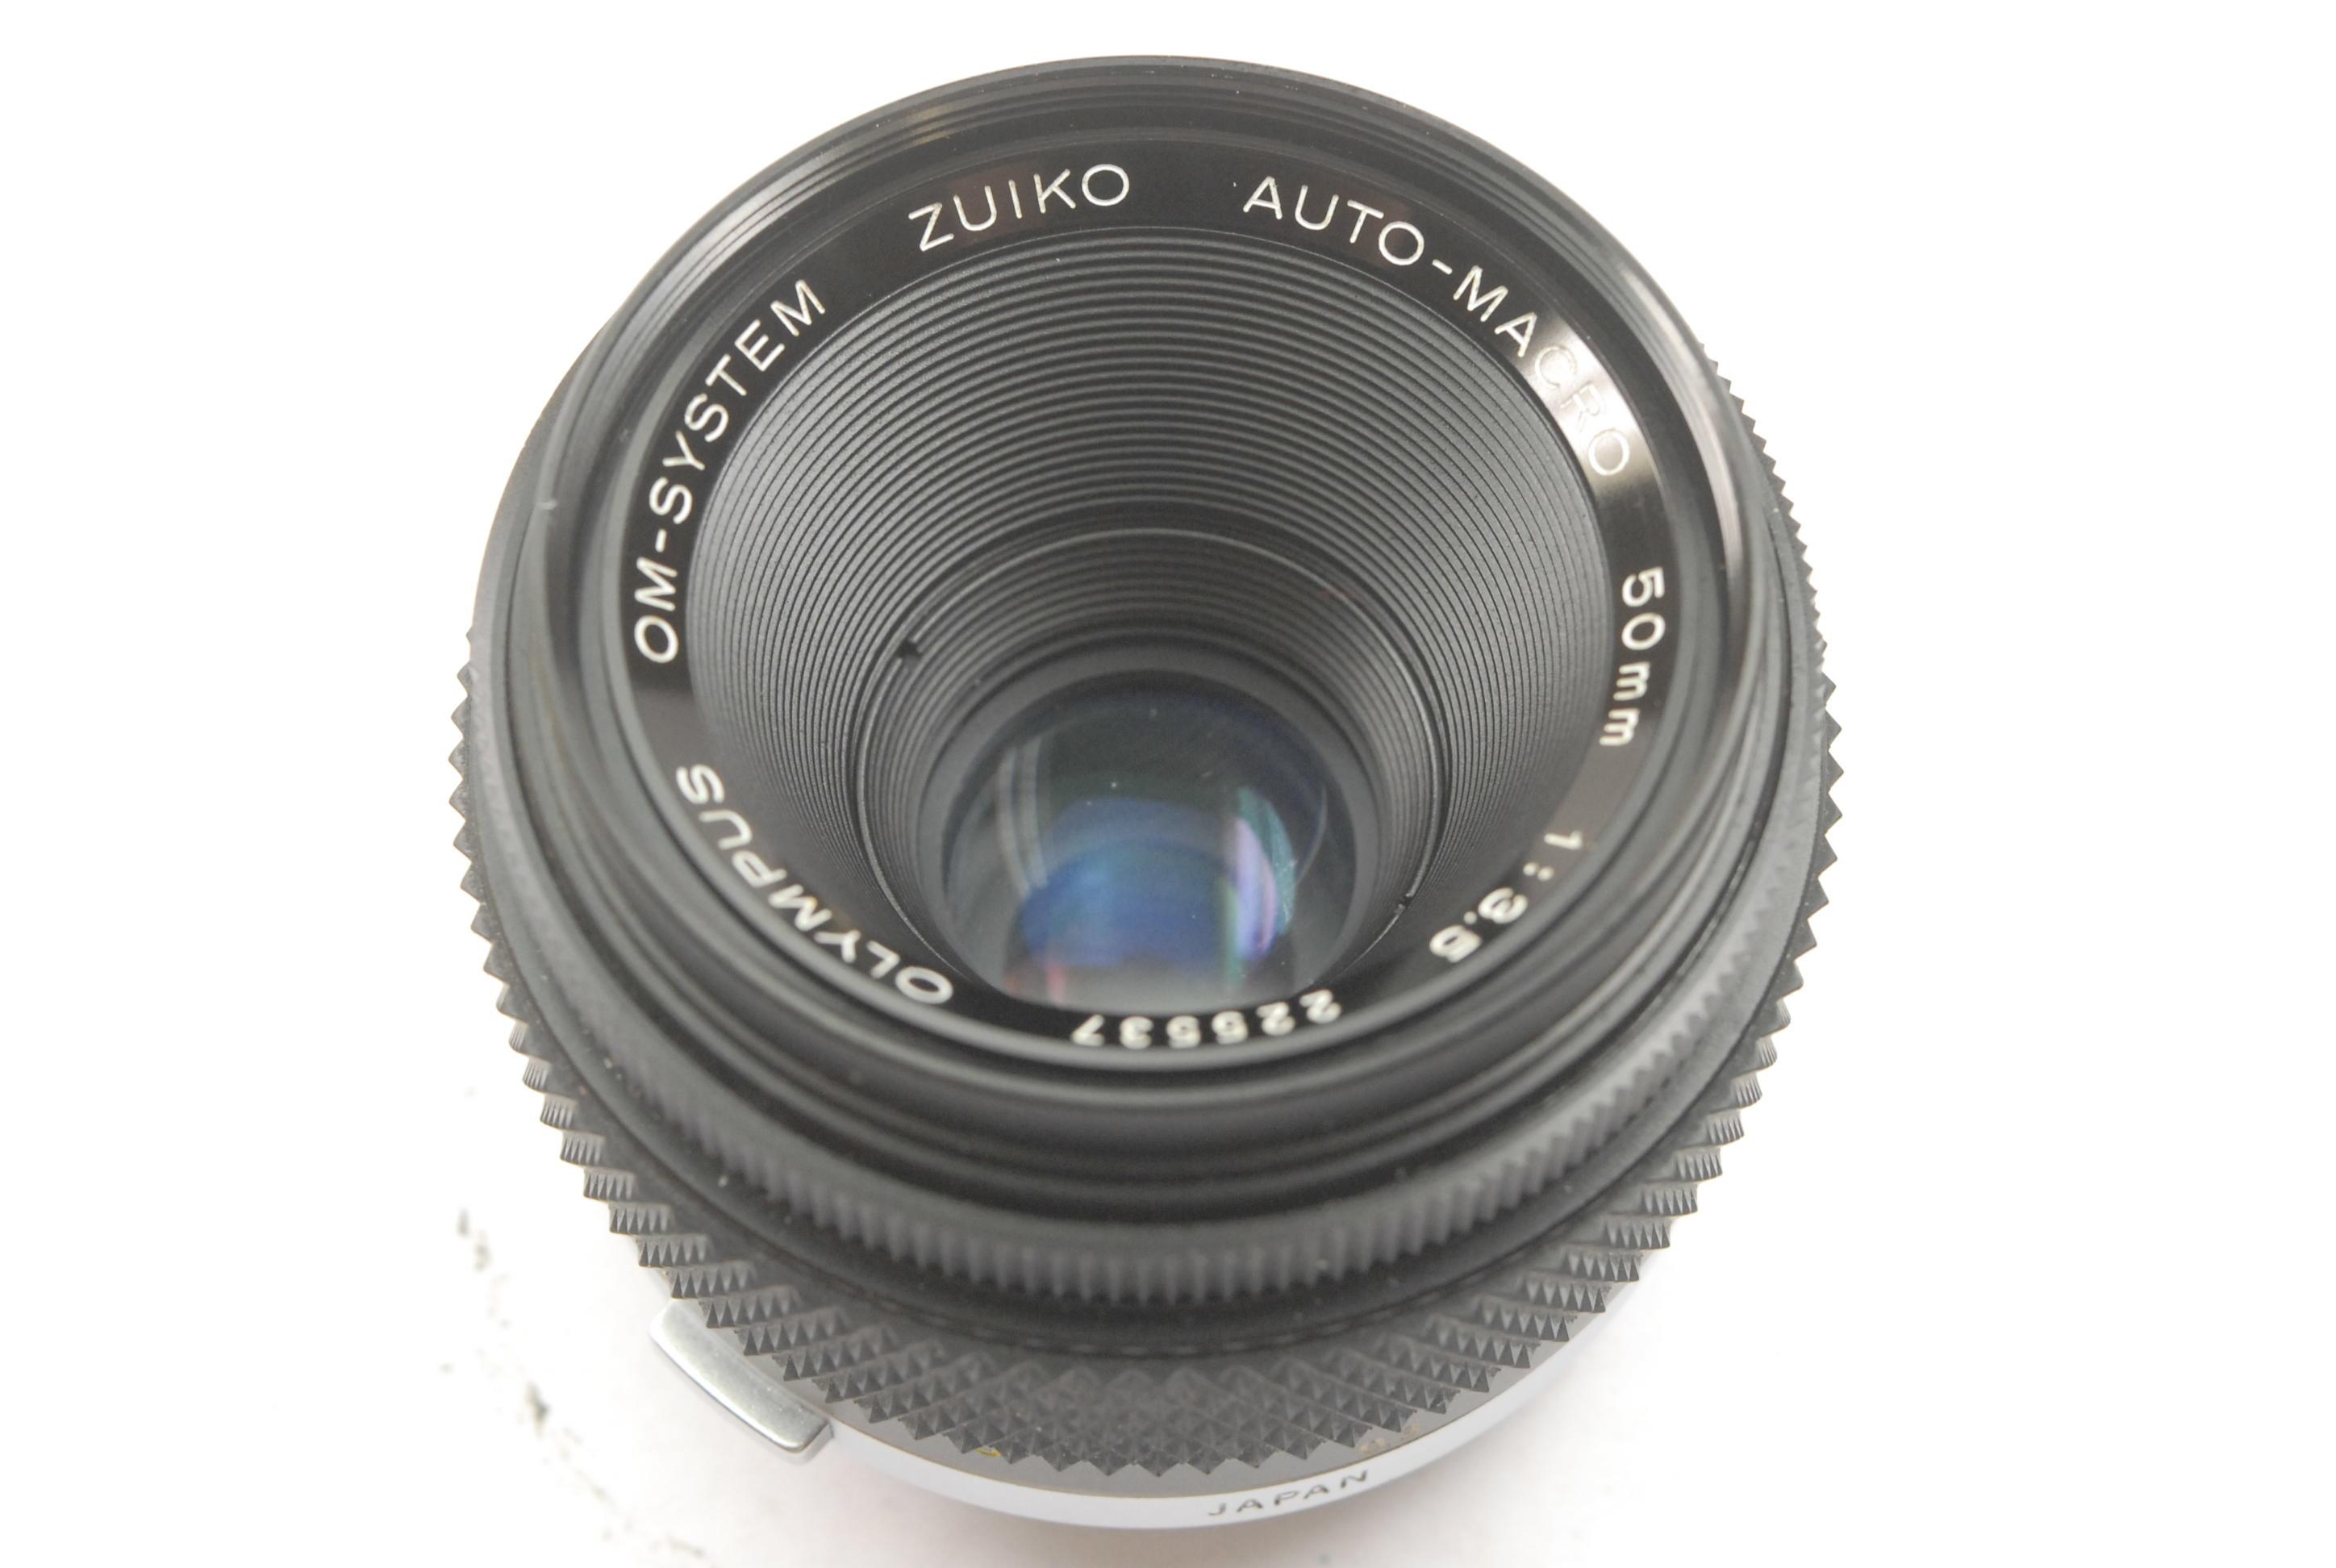 Olympus OM 50mm f3.5 Zuiko Auto-Macro lens, Excellent Condition